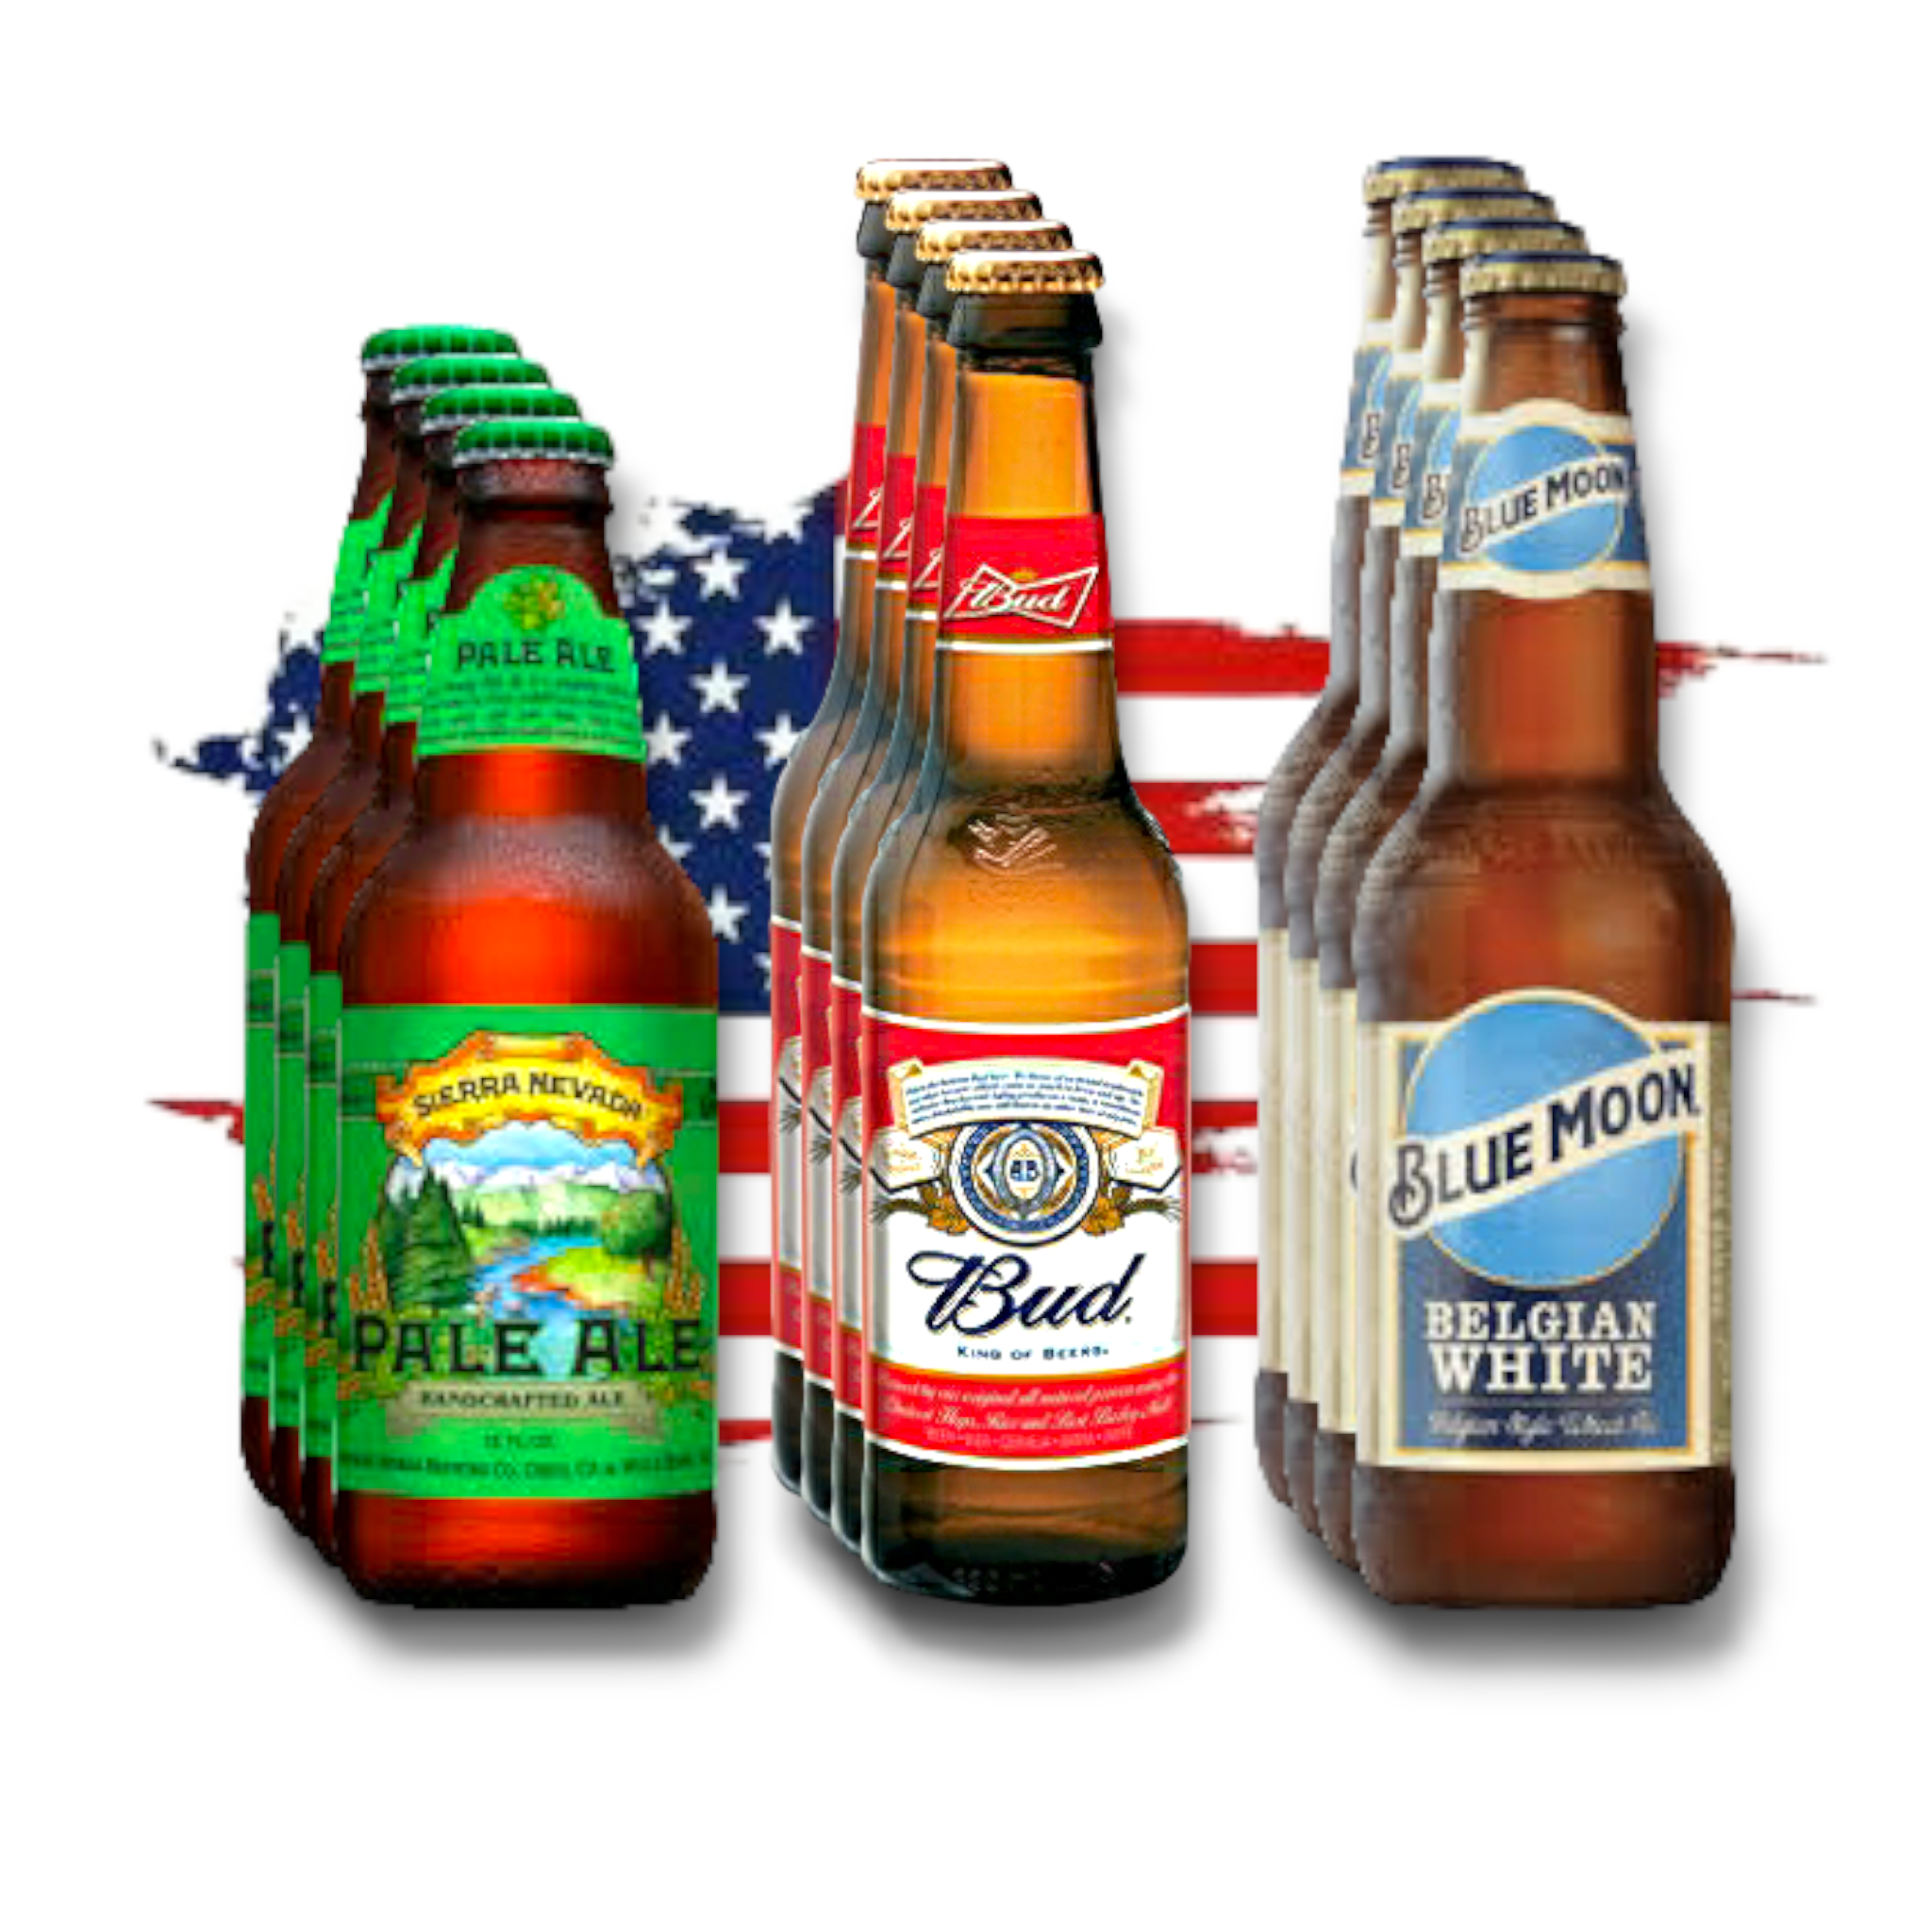 Deine Reise nach Amerika - Sierra Nevada - Bud King of Beer- Blue Moon Belgian White 0,3l